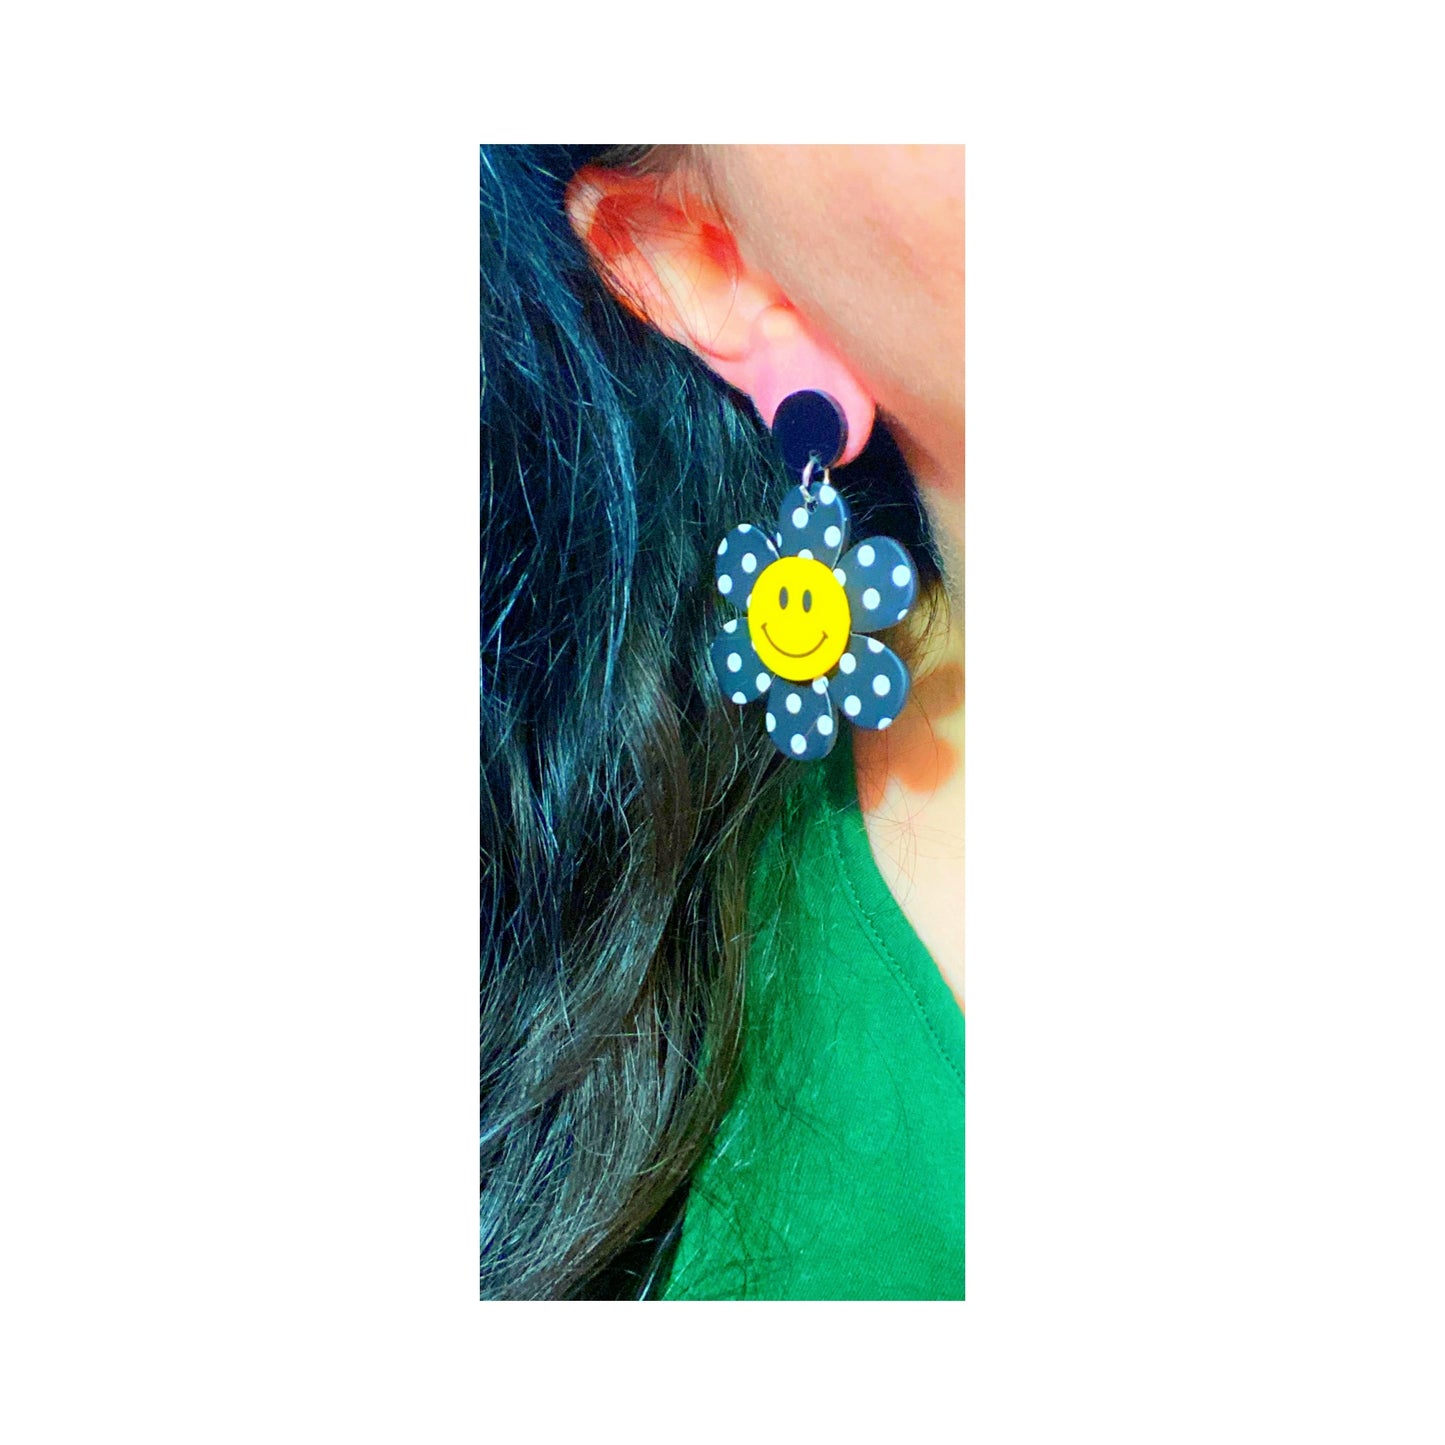 Black & White Polka Dot Flower Smiley Face Acrylic Drop Earrings